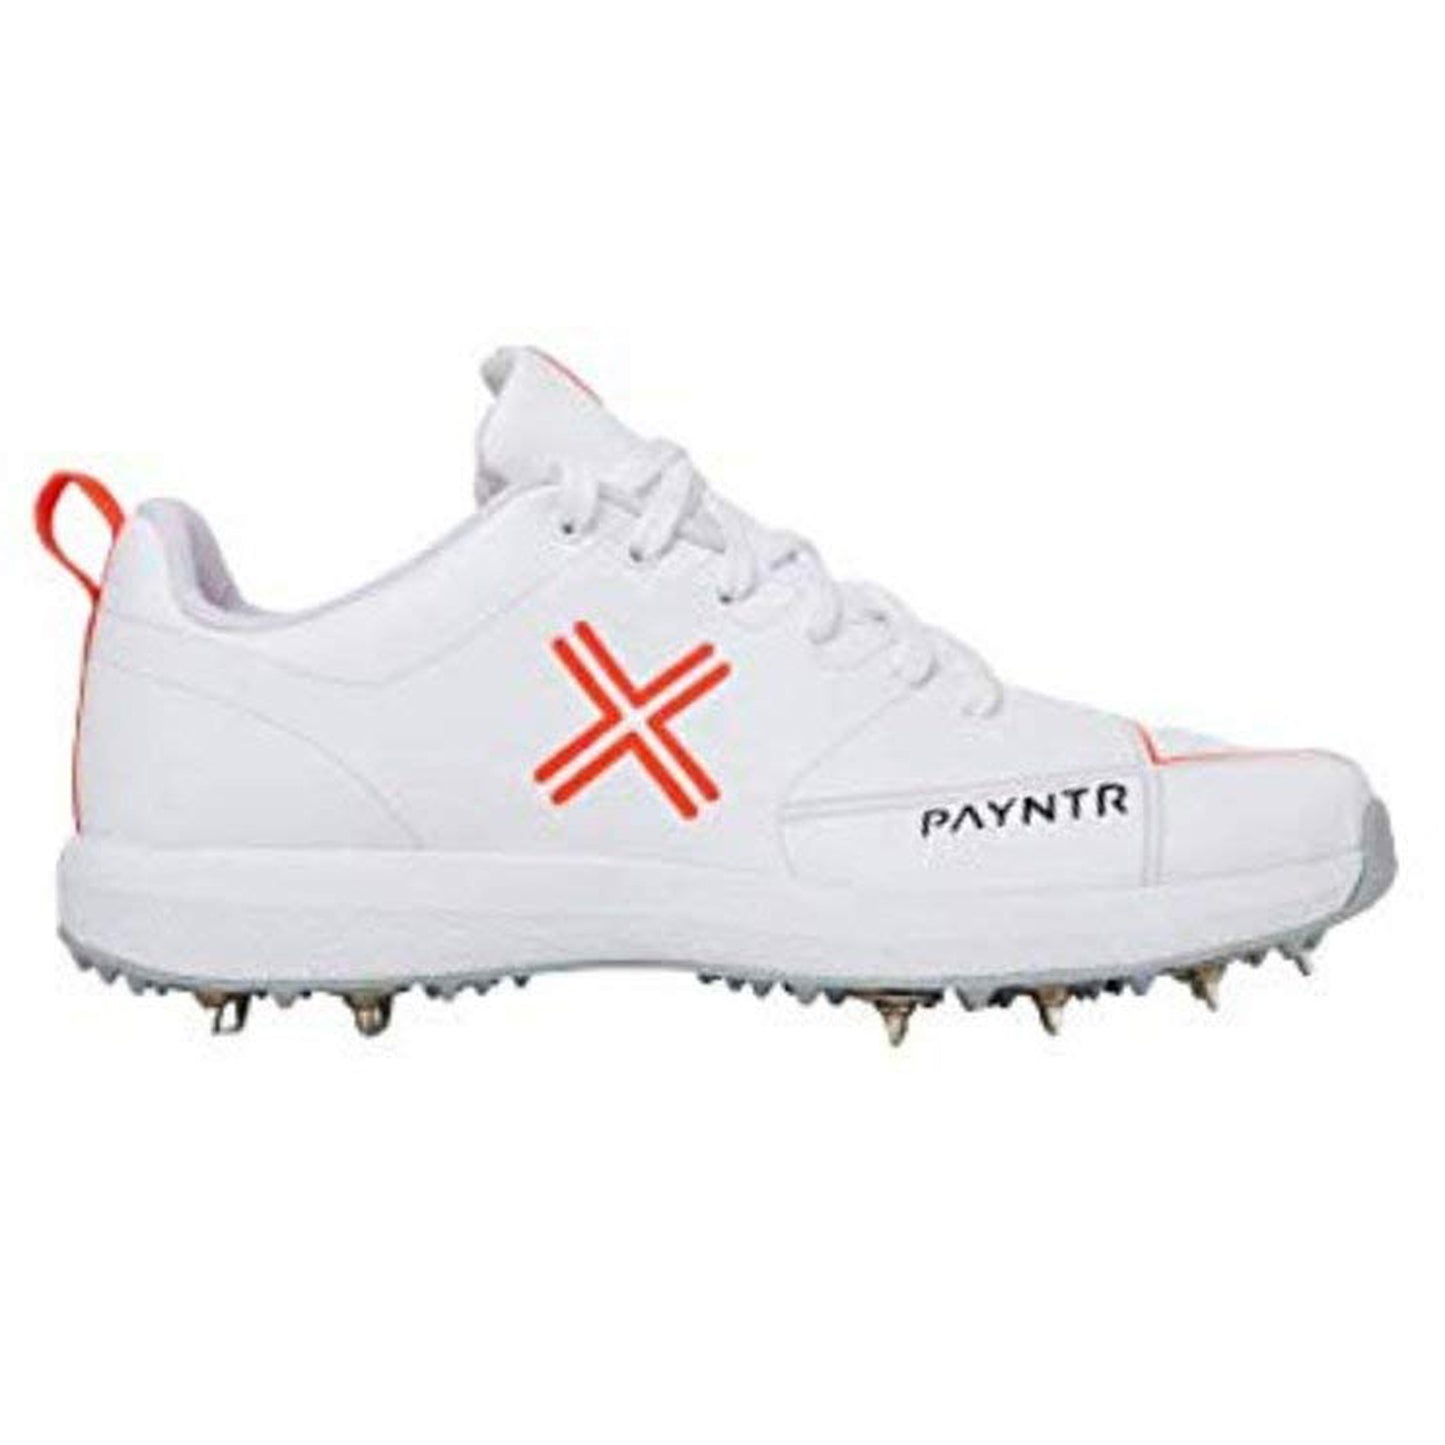 Payntr Spike Cricket Shoes, White - Best Price online Prokicksports.com